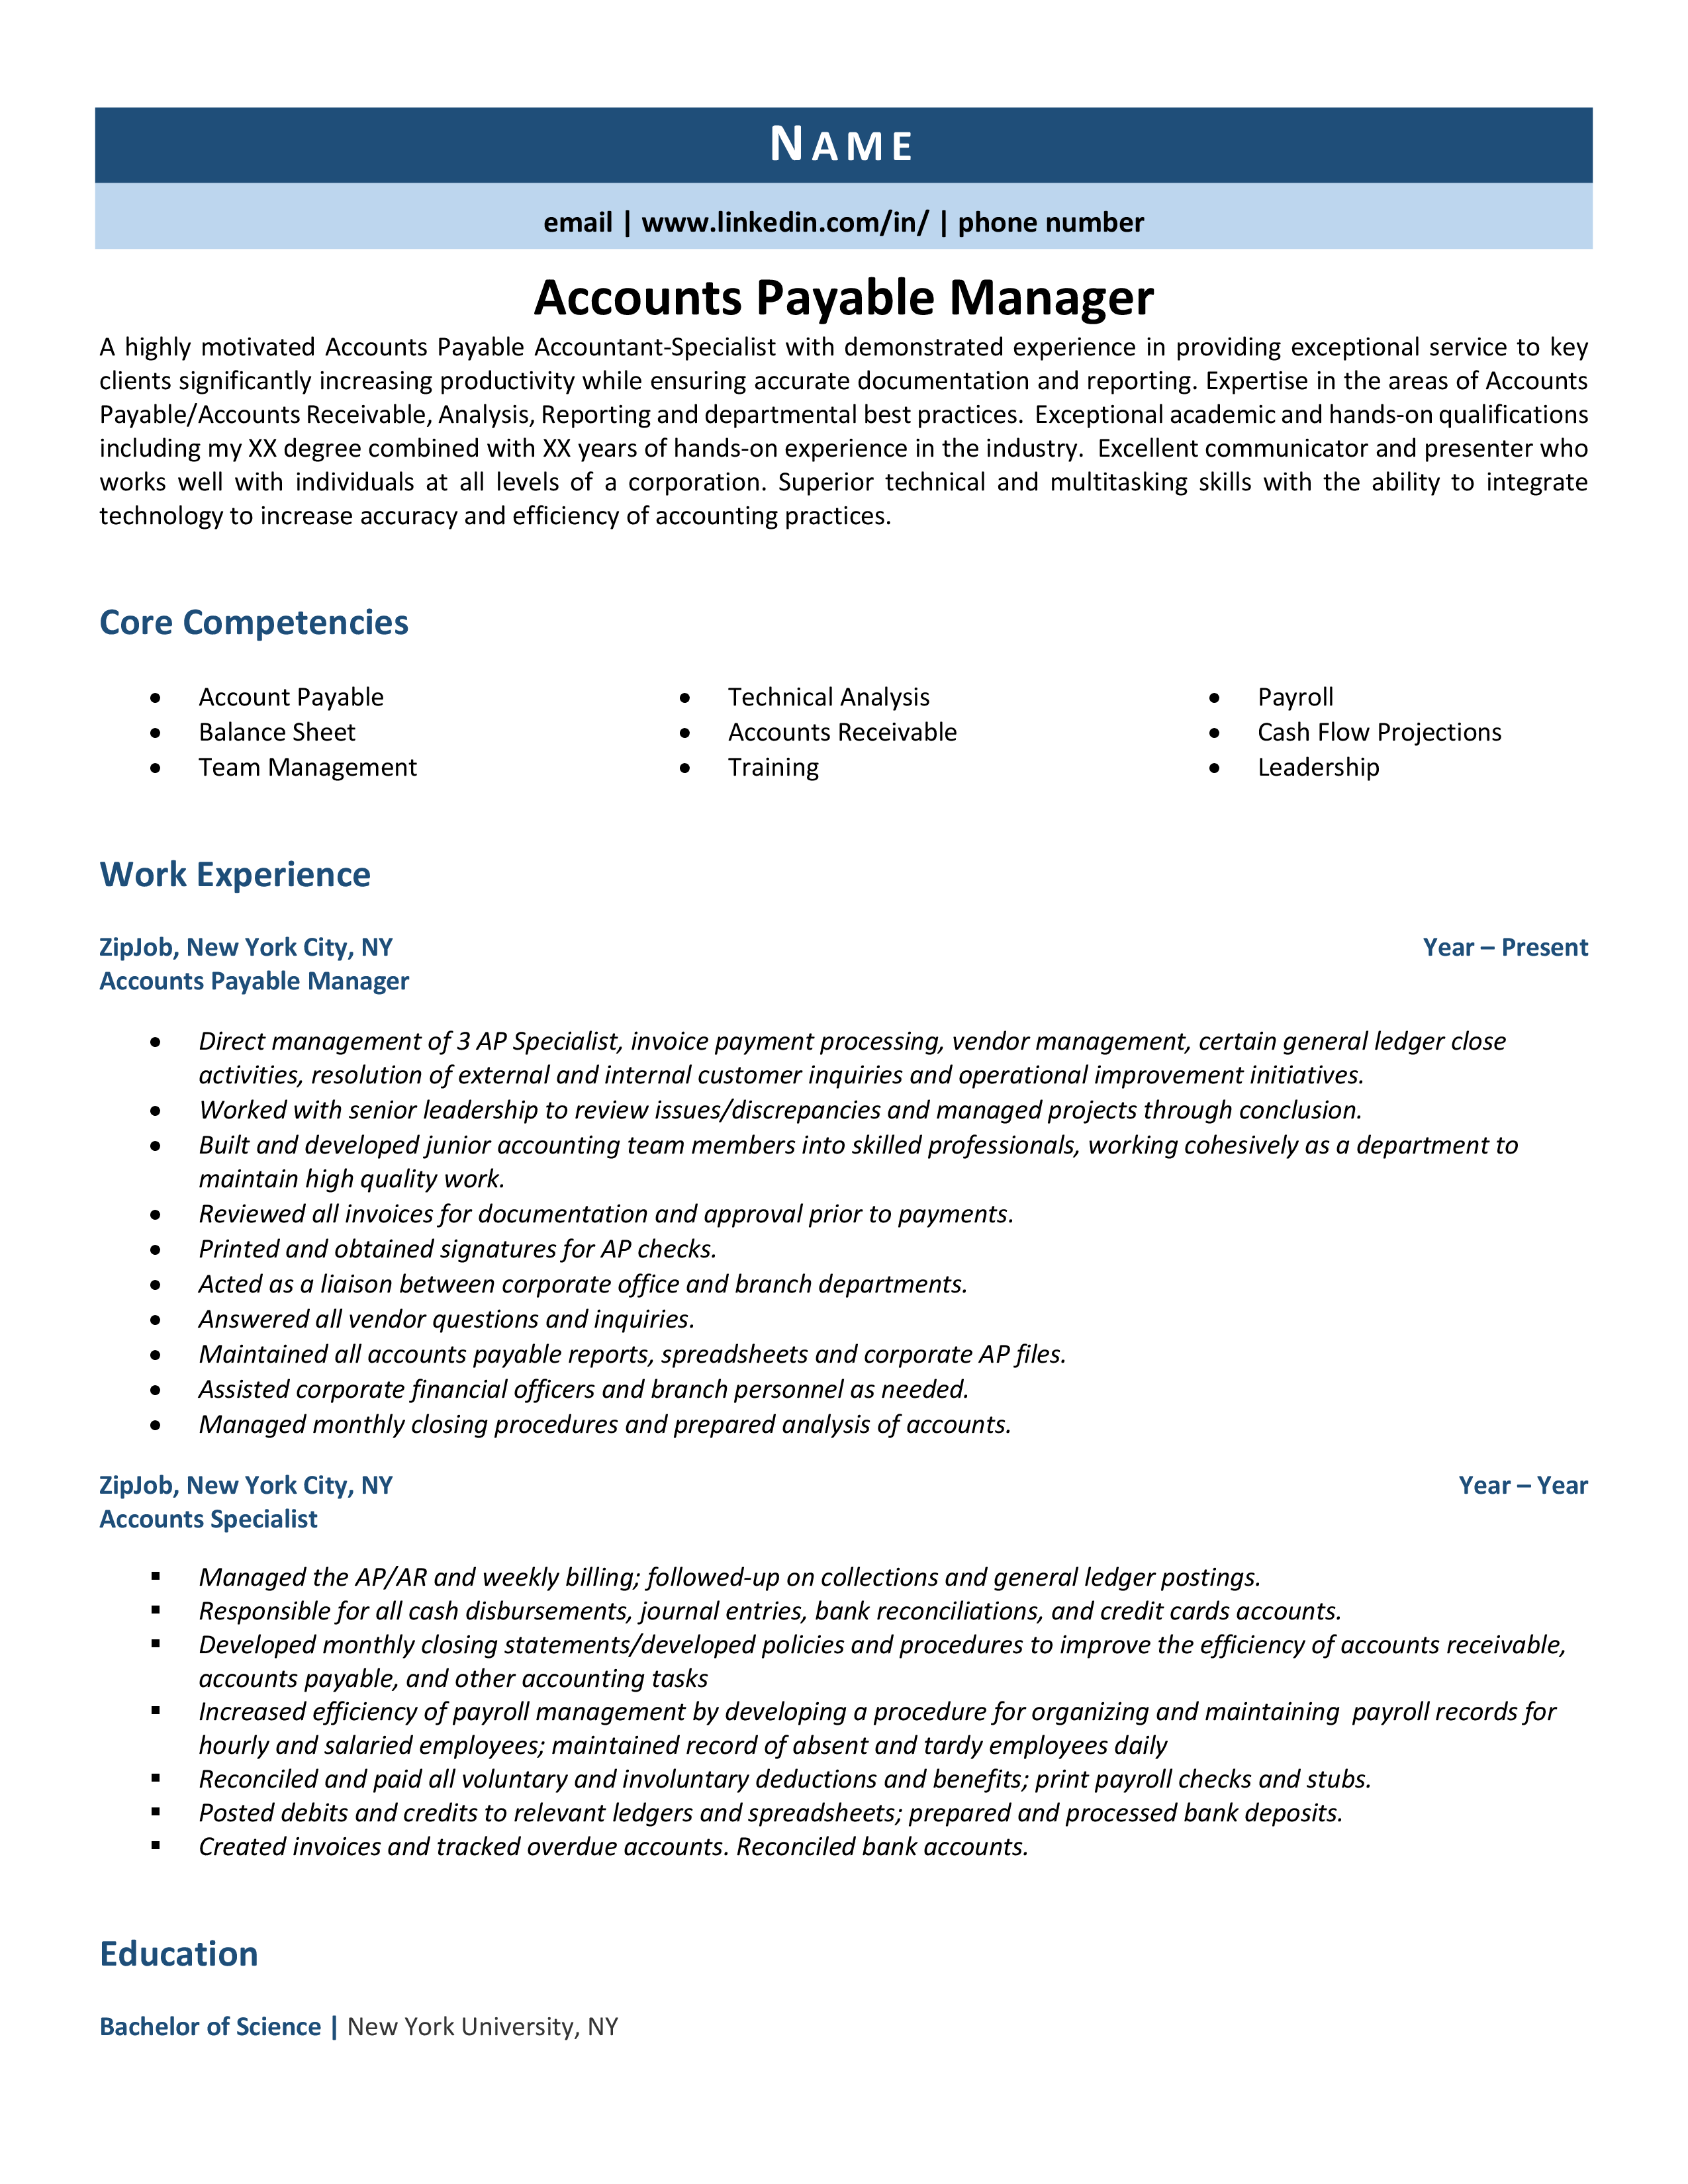 accounts payable manager job description for resume